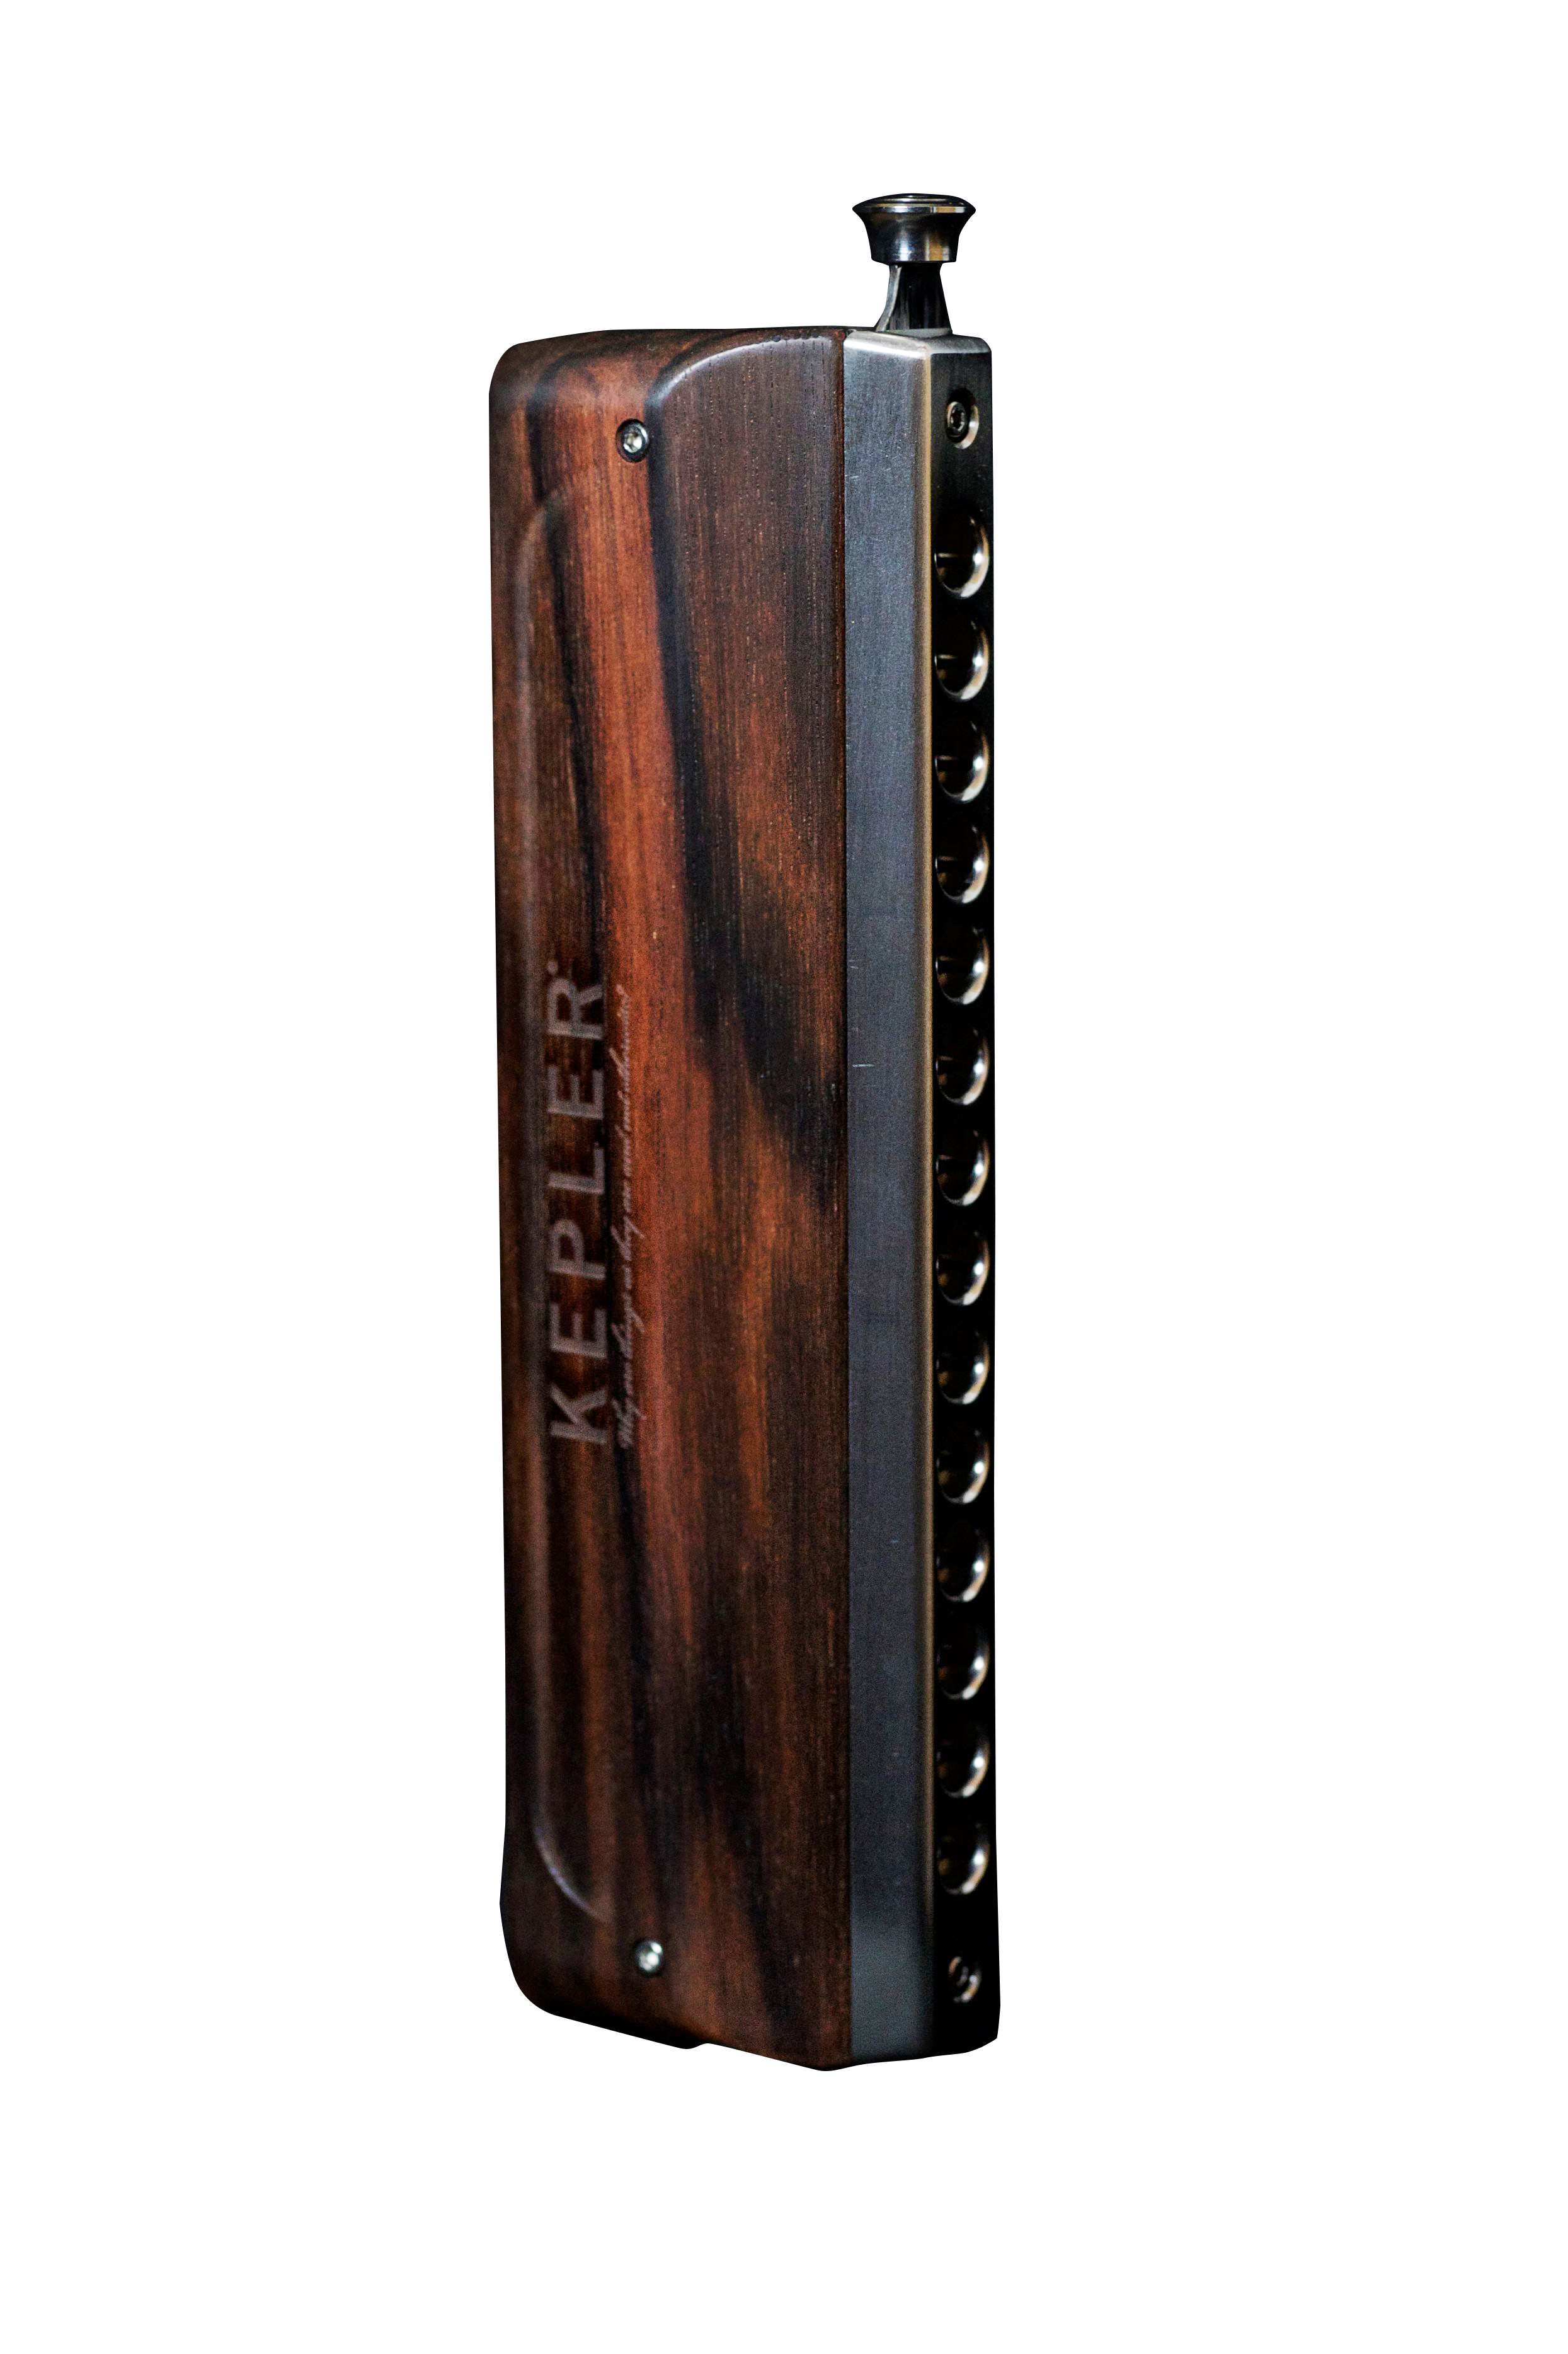 KEPLER 14 Chromatic Harmonica - Titanium Comb with Blackwood Cover